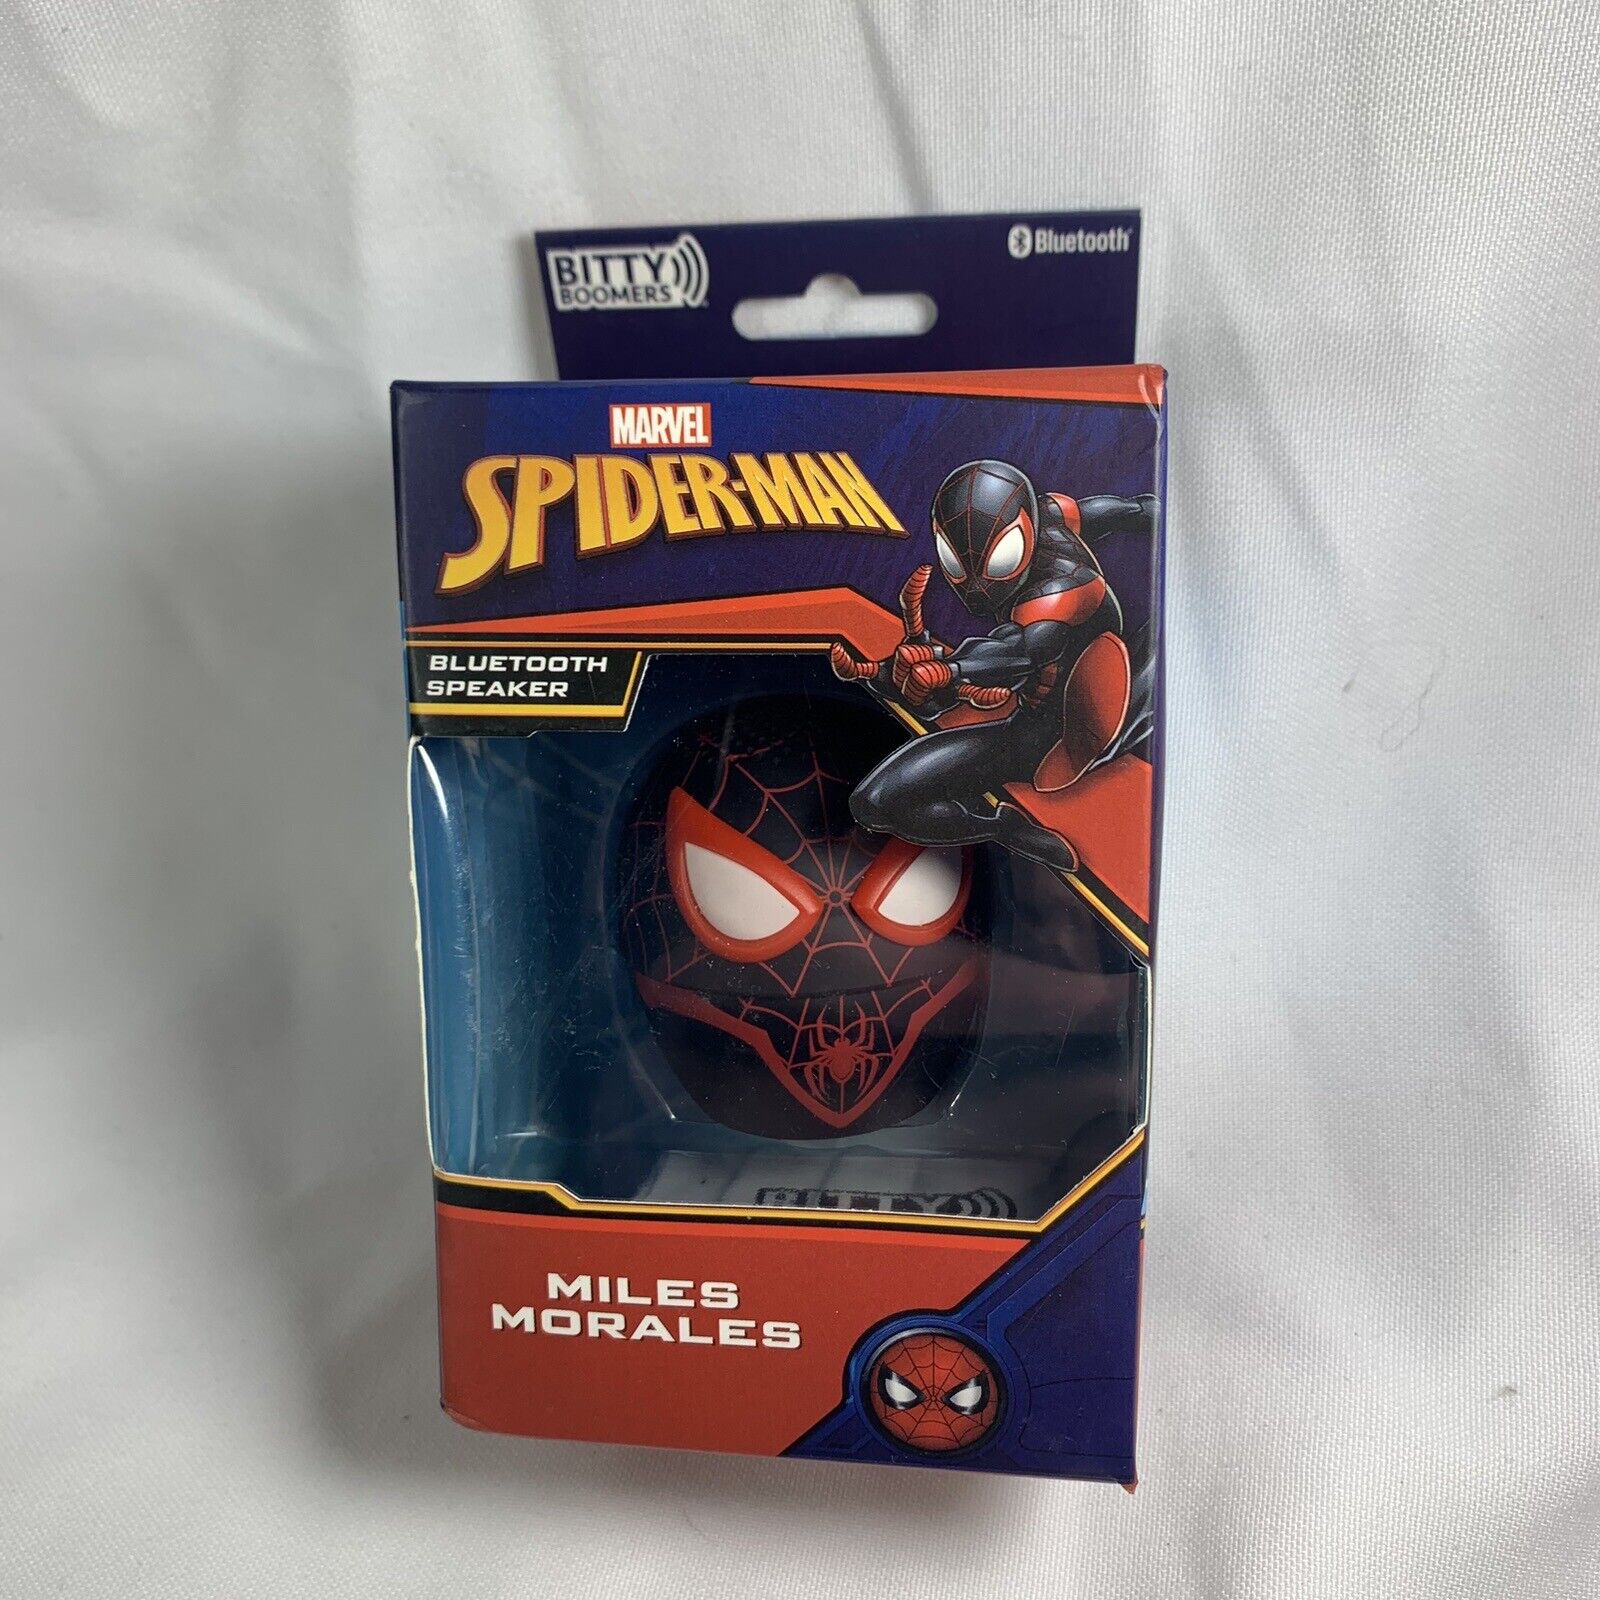 Bitty Boomers Spiderman Miles Morales Bluetooth Speaker Keychain